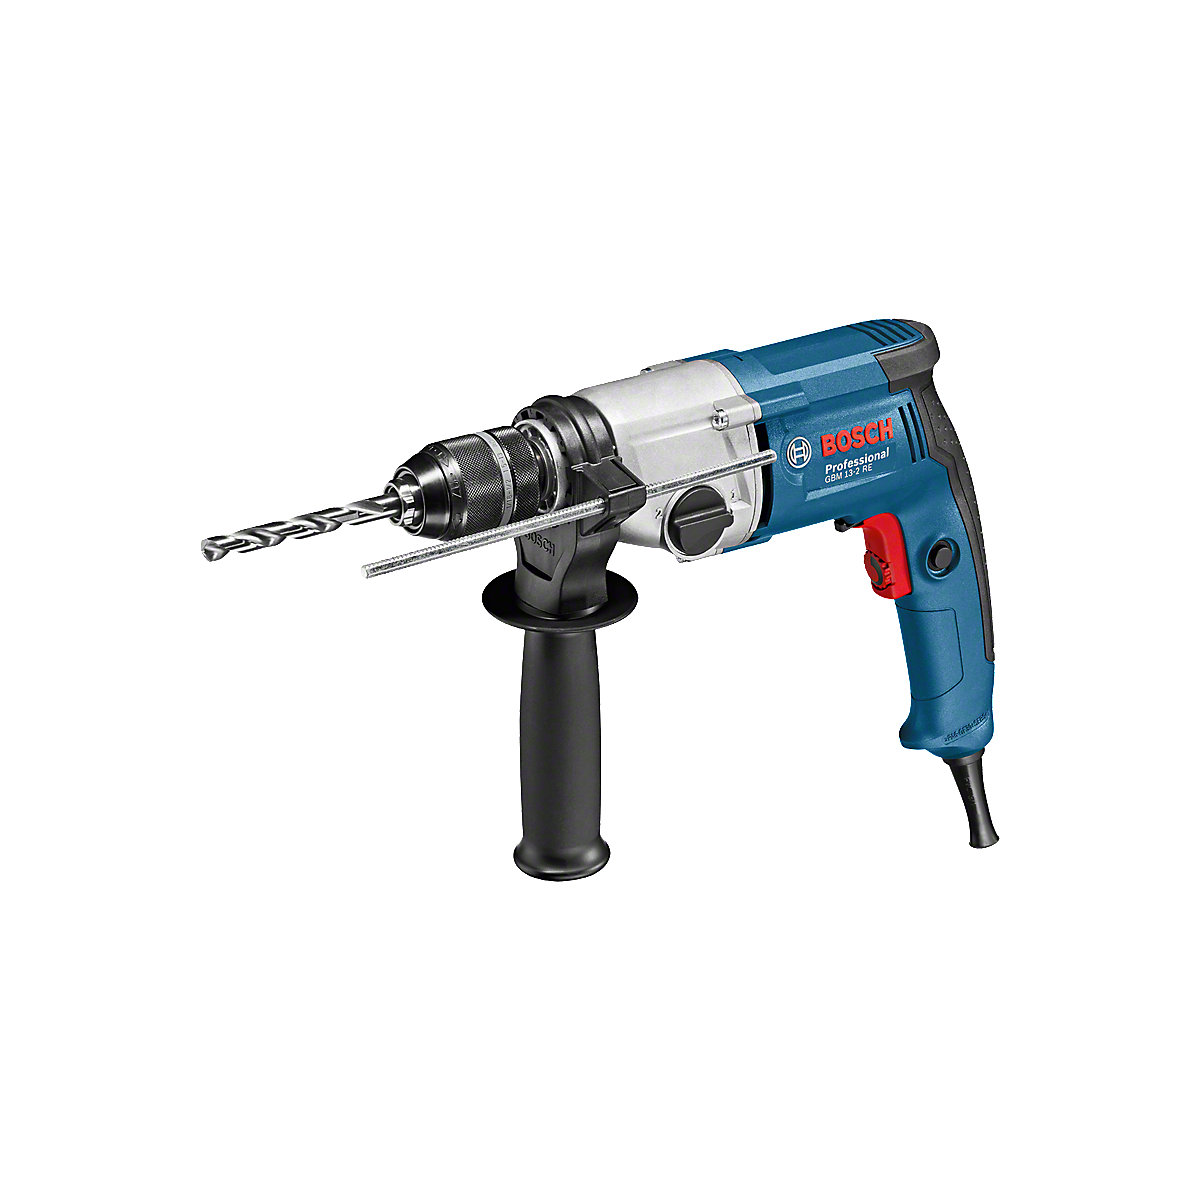 GBM 13-2 RE Professional drill – Bosch